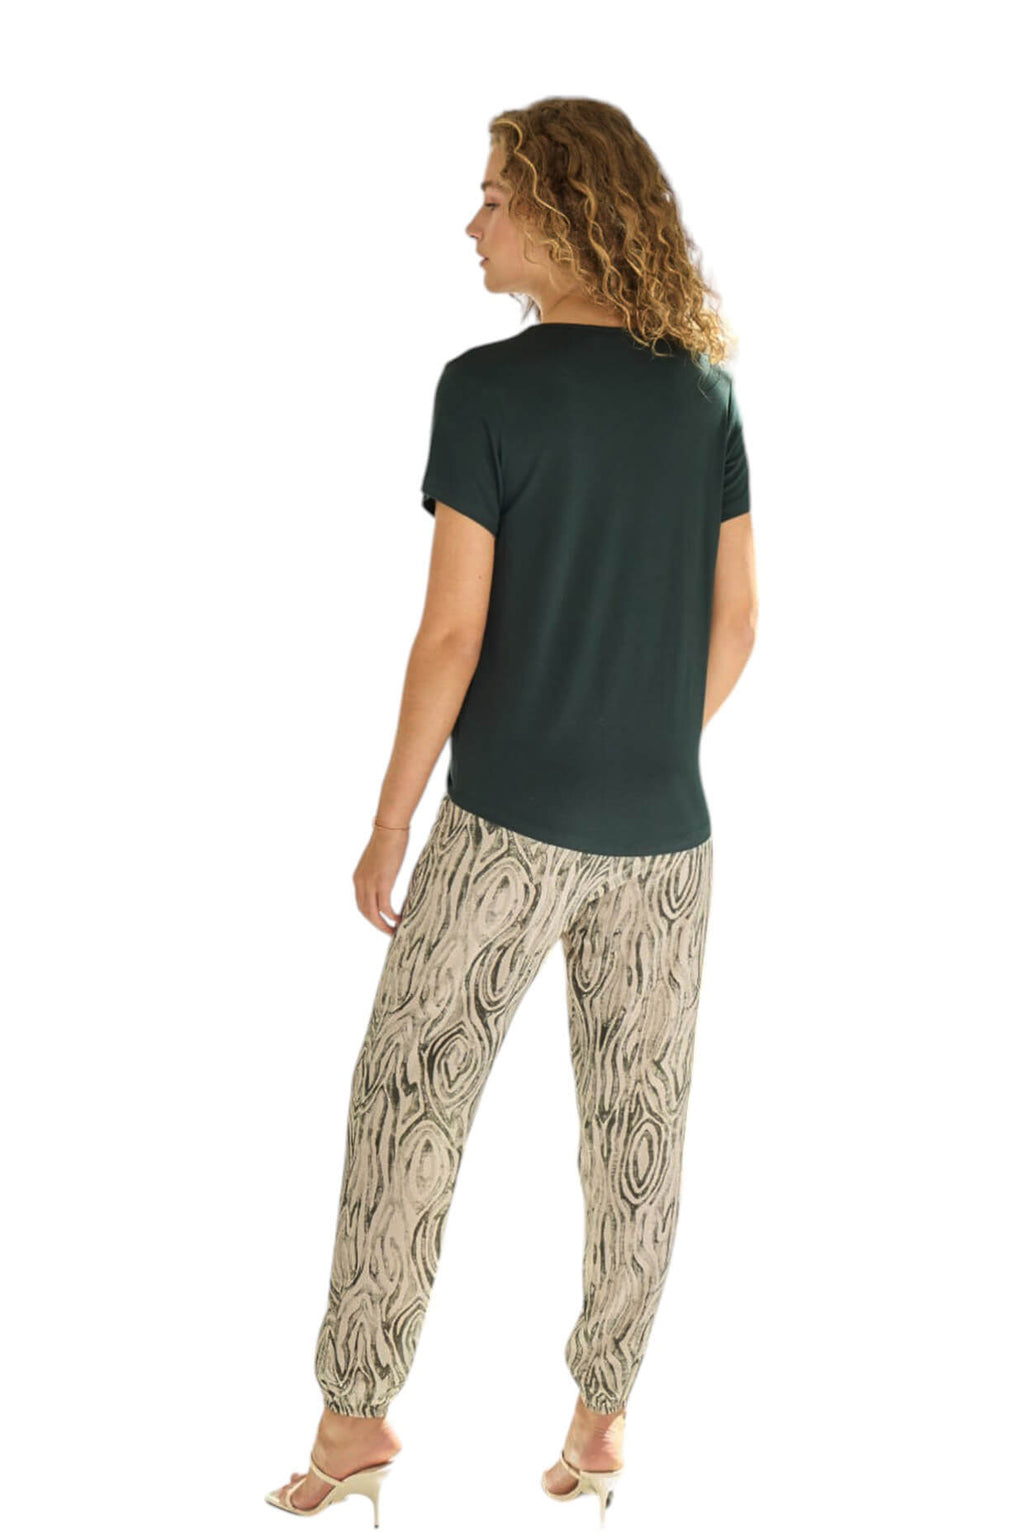  Sleepwear Pants with Plain V-Neck Top